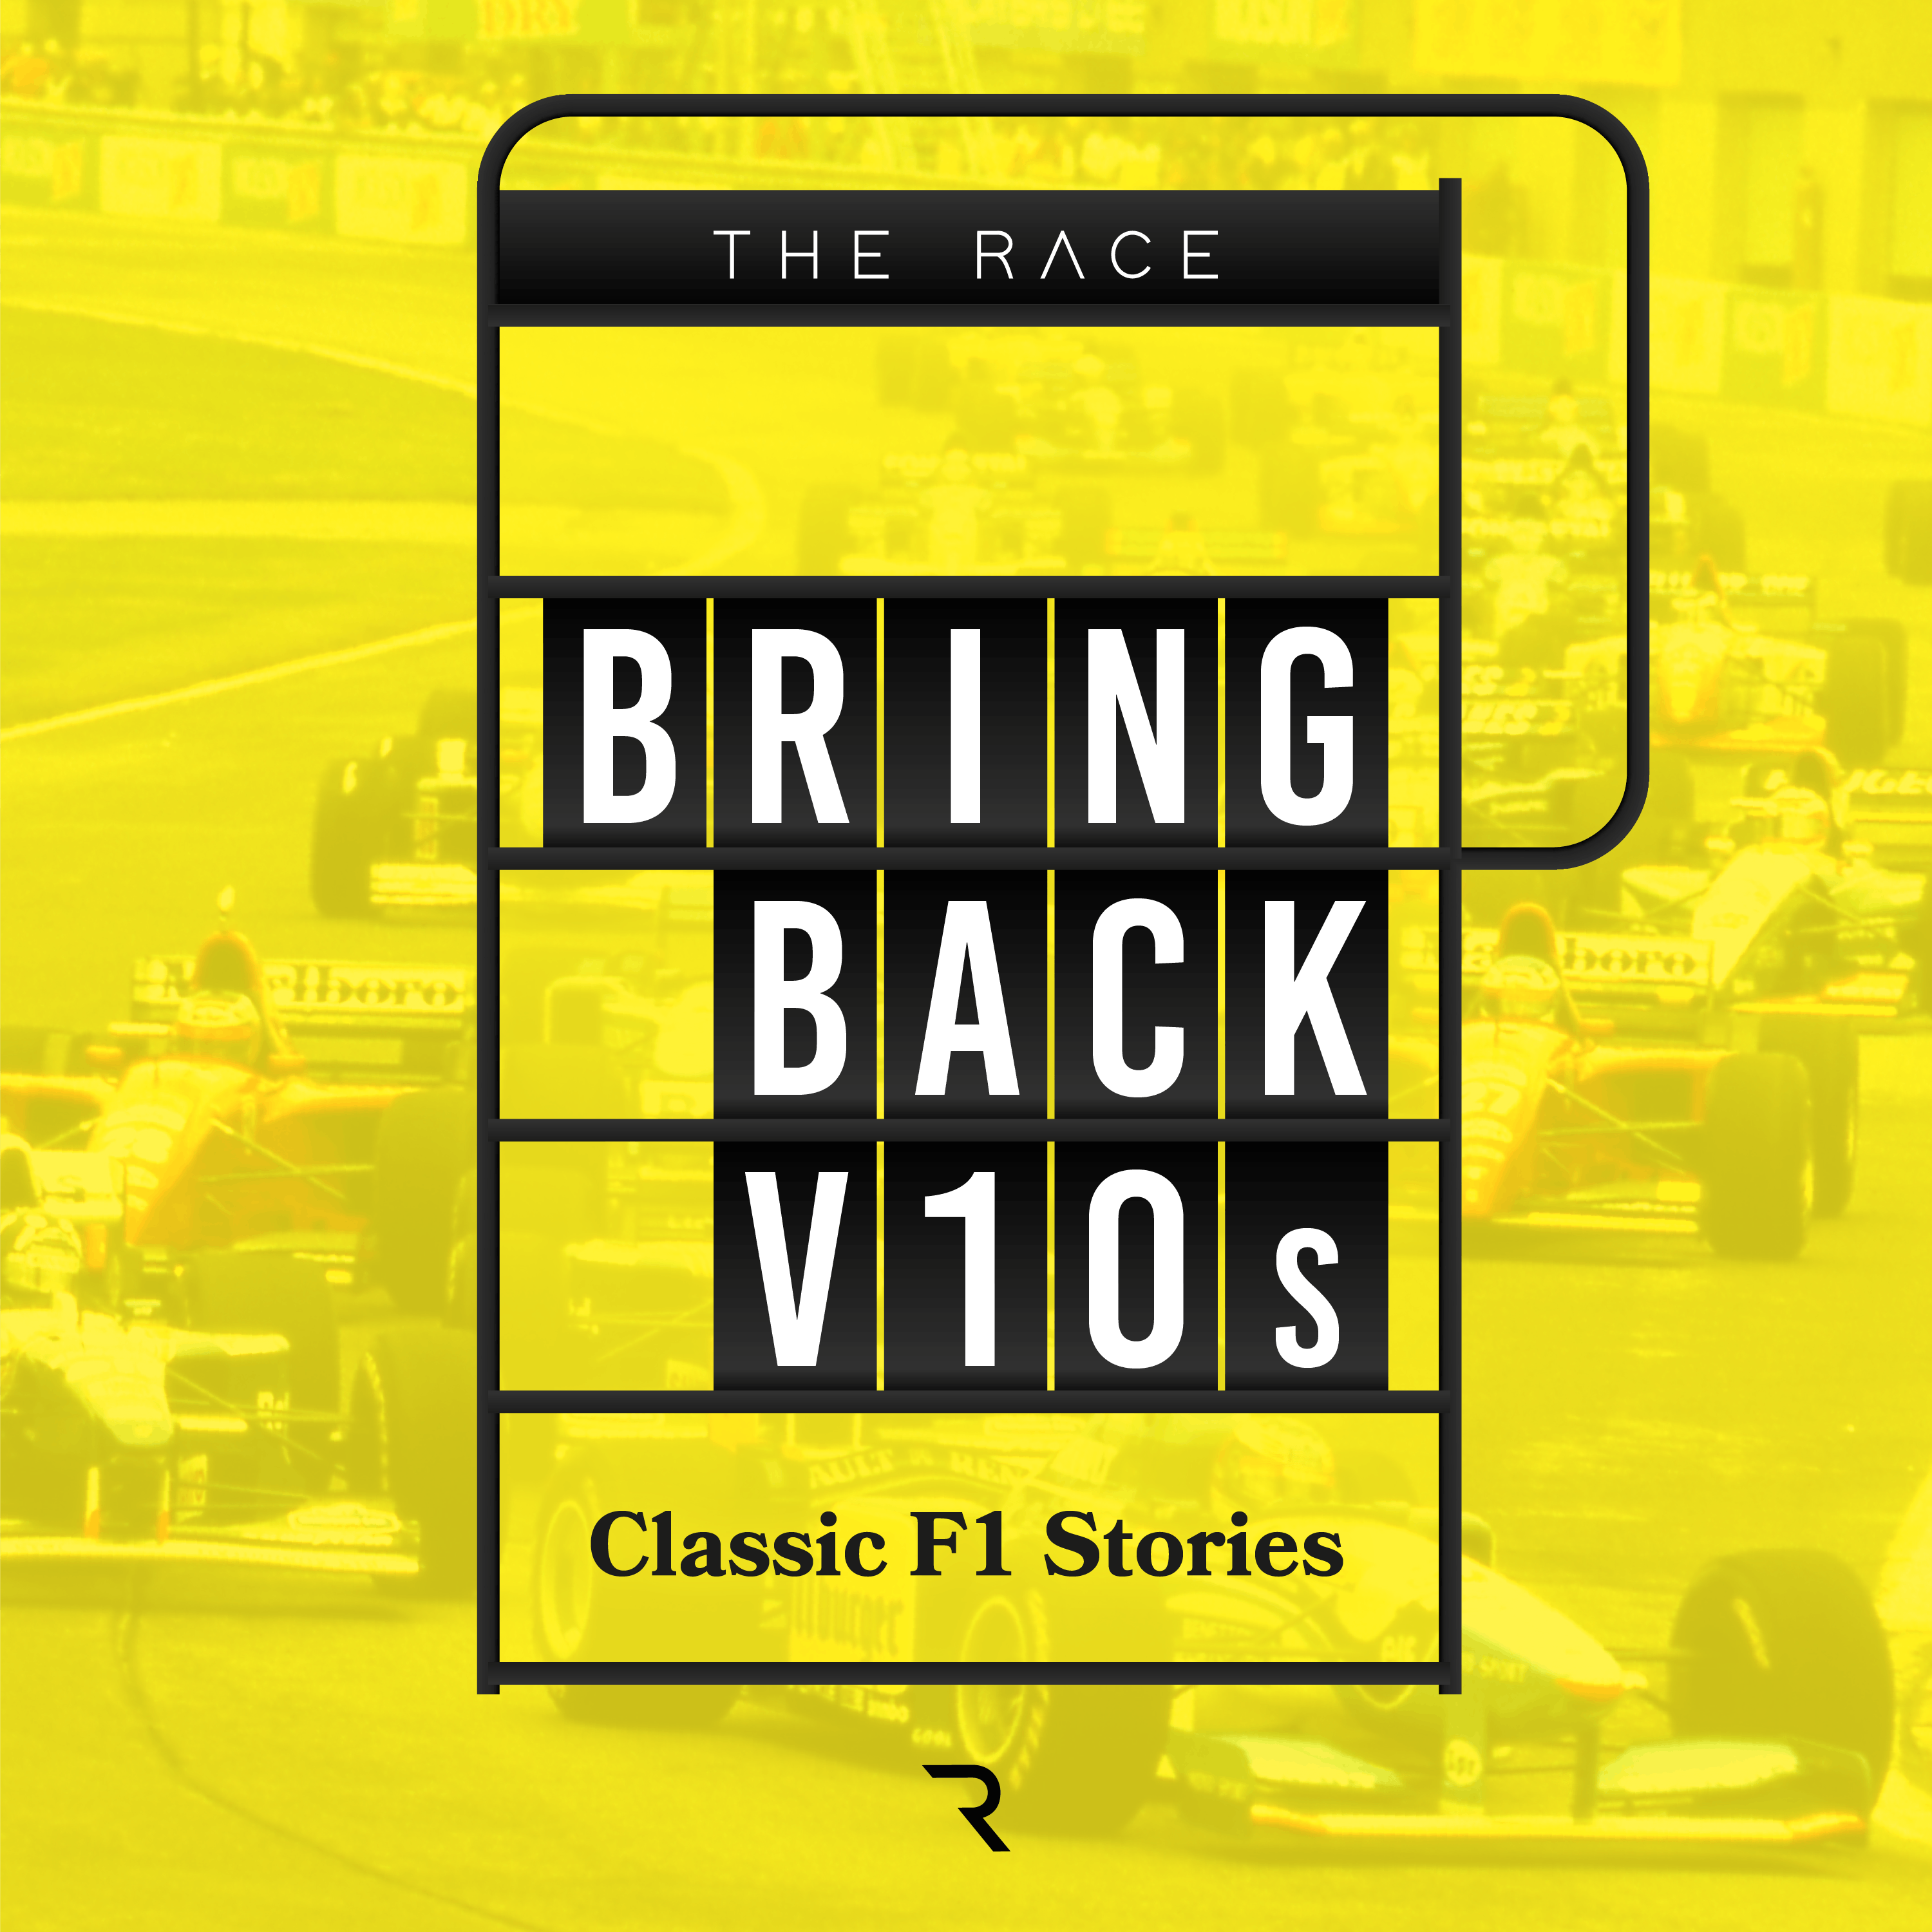 Bring Back V10s - Classic F1 stories